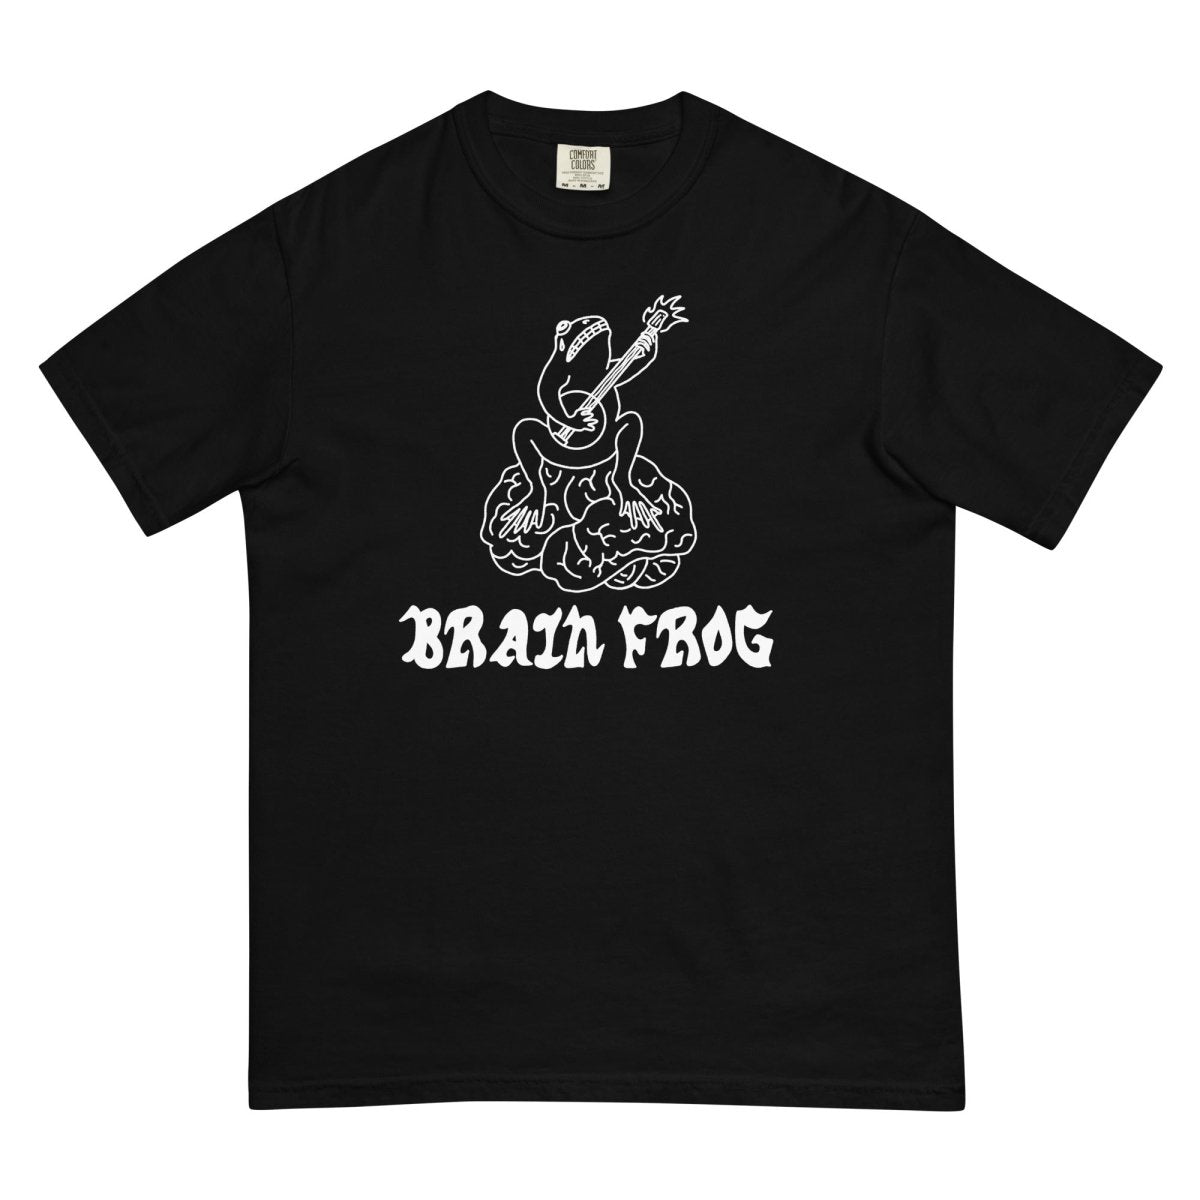 Brain Frog white on black t-shirt - T-Shirt - Pretty Bad Co.